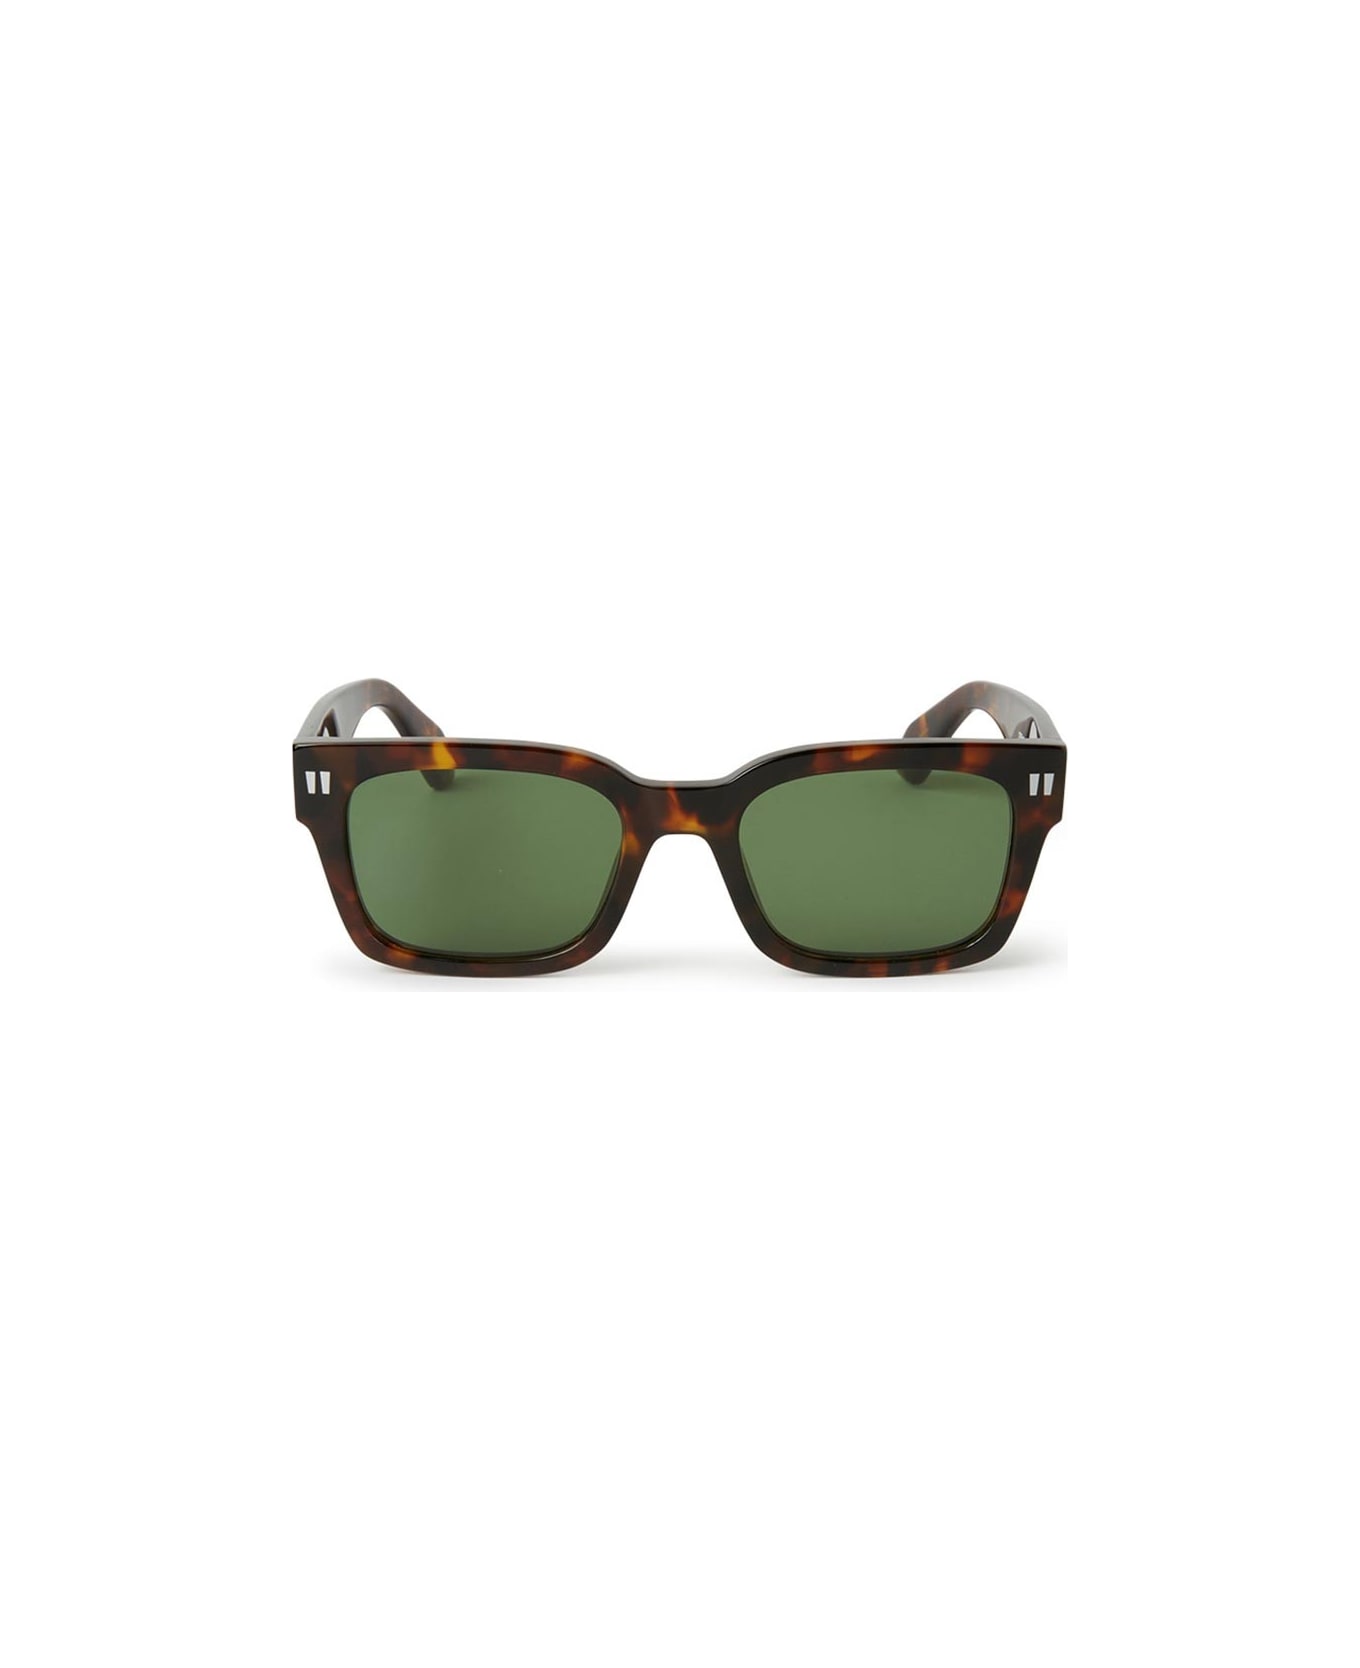 Off-White Sunglasses - Havana/Verde